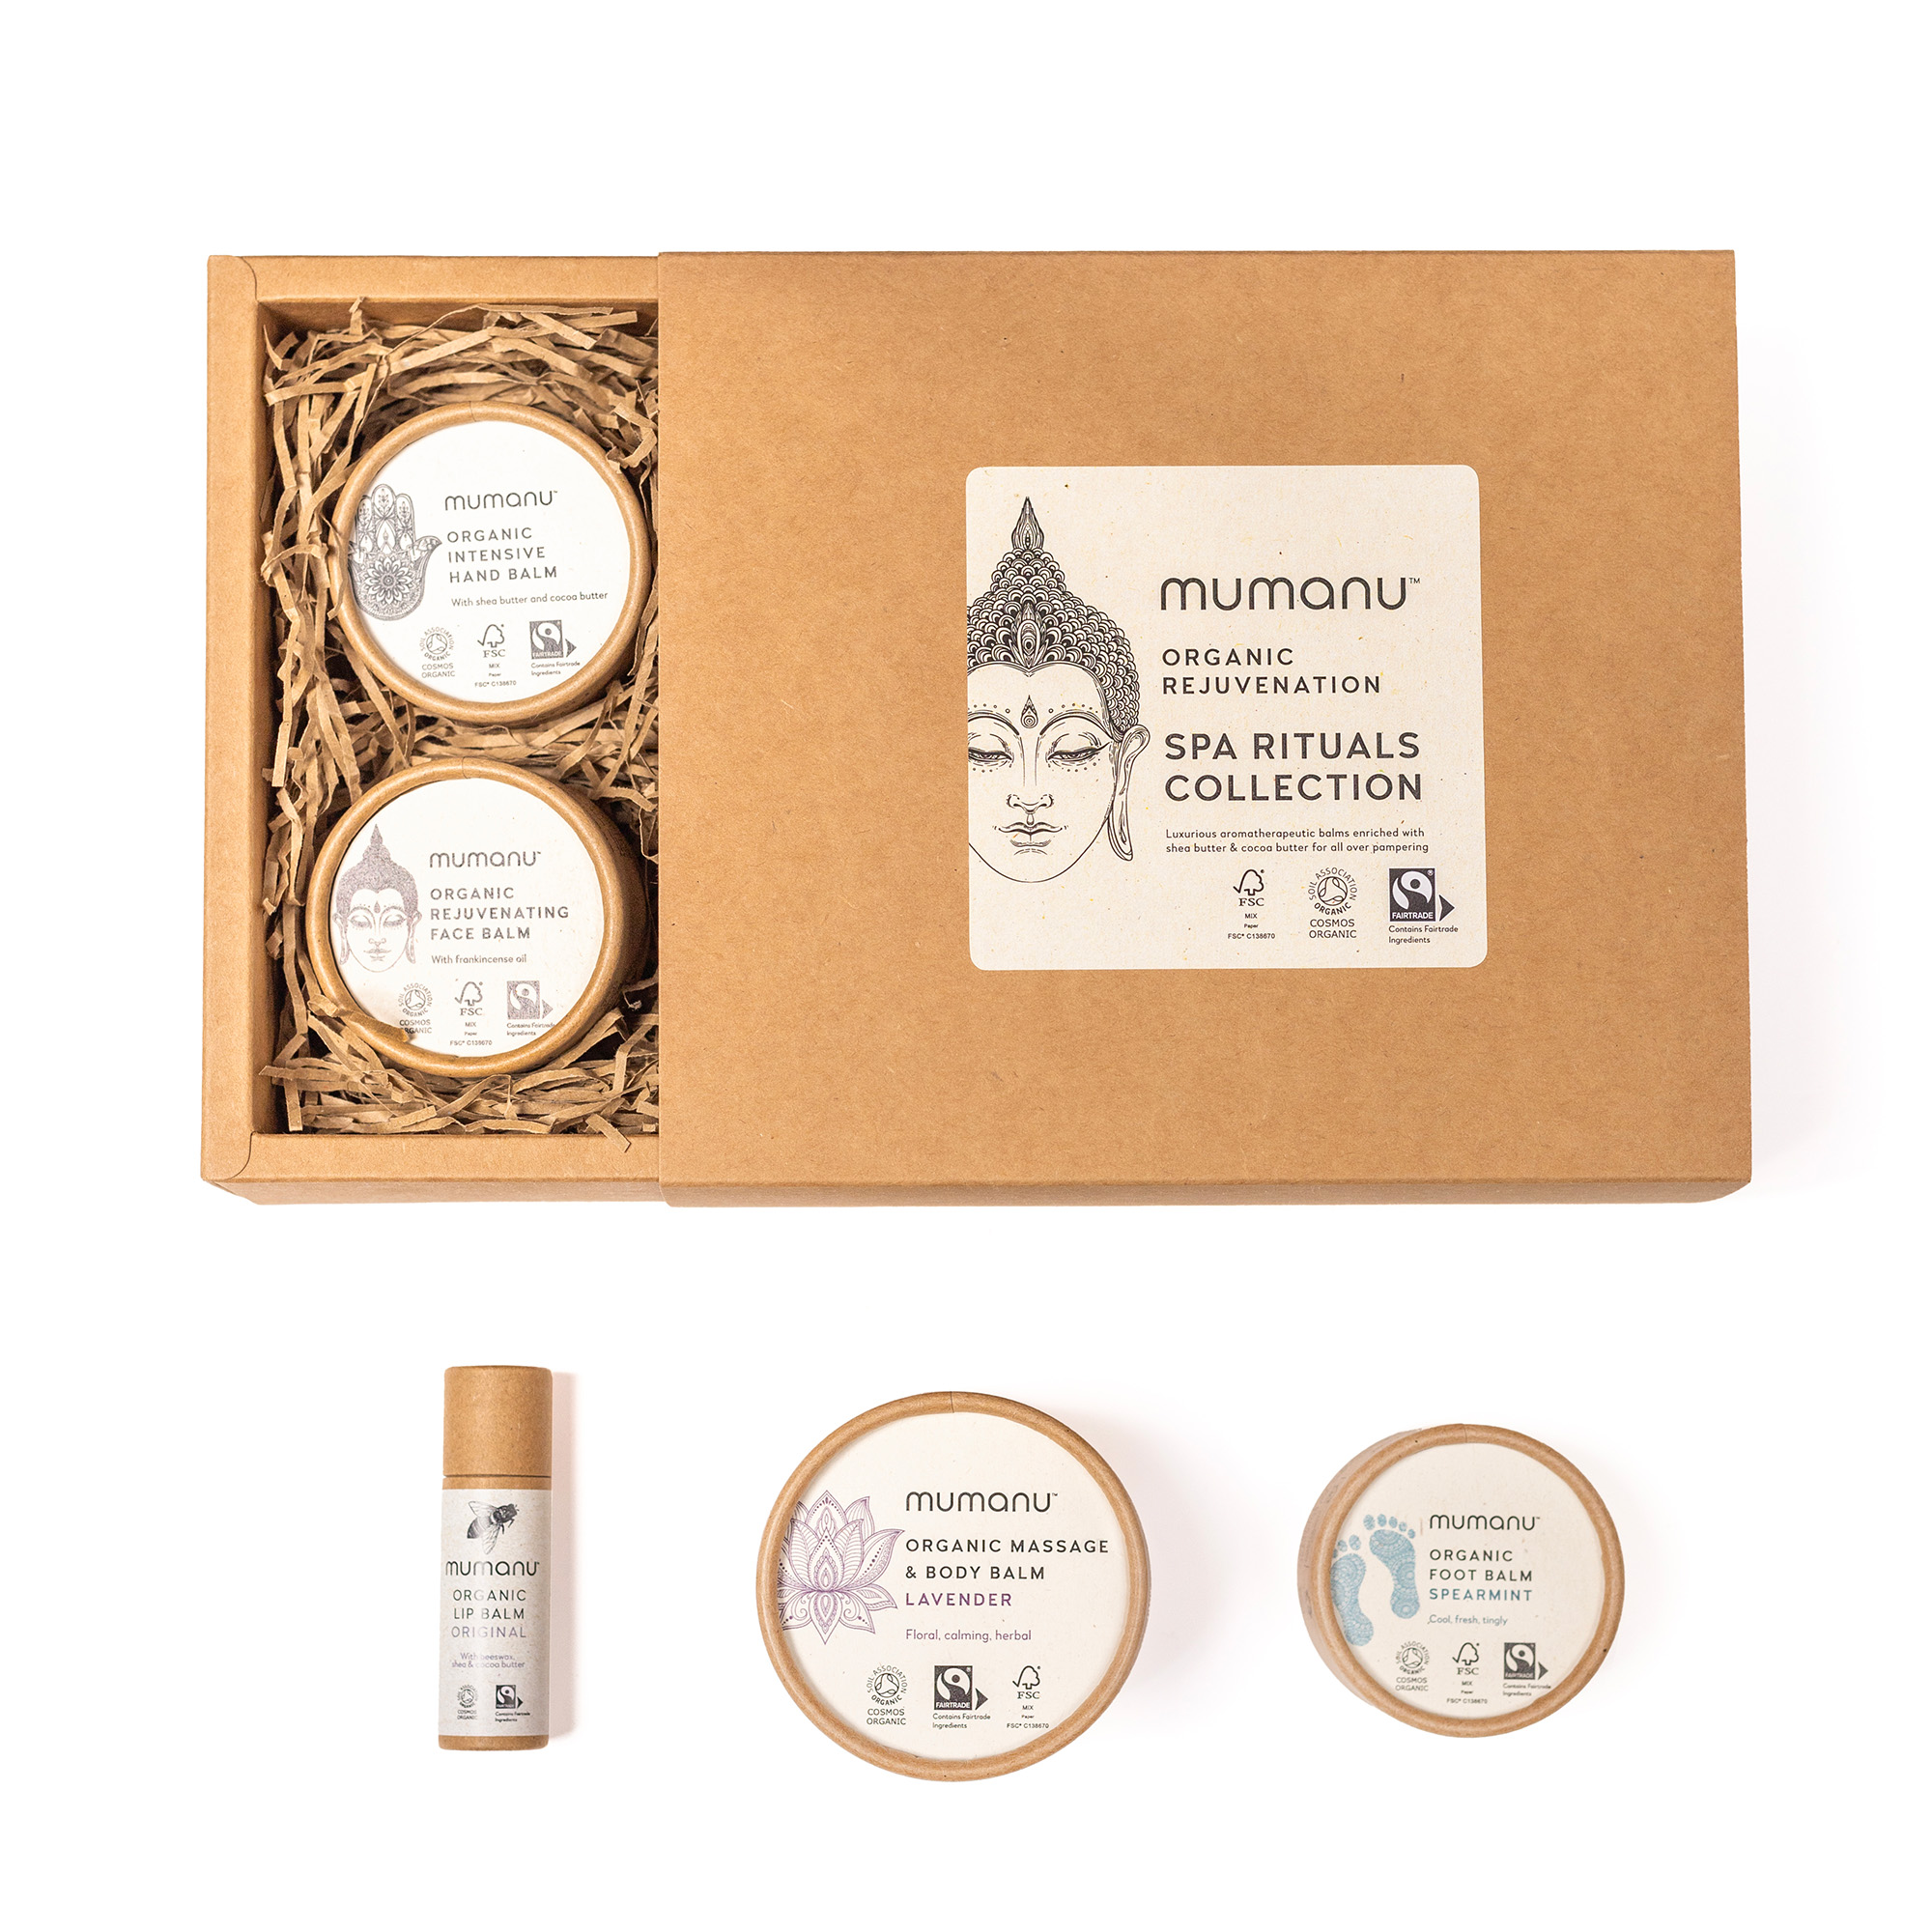 Mumanu Organic Spa Rituals Collection - Pamper gift set